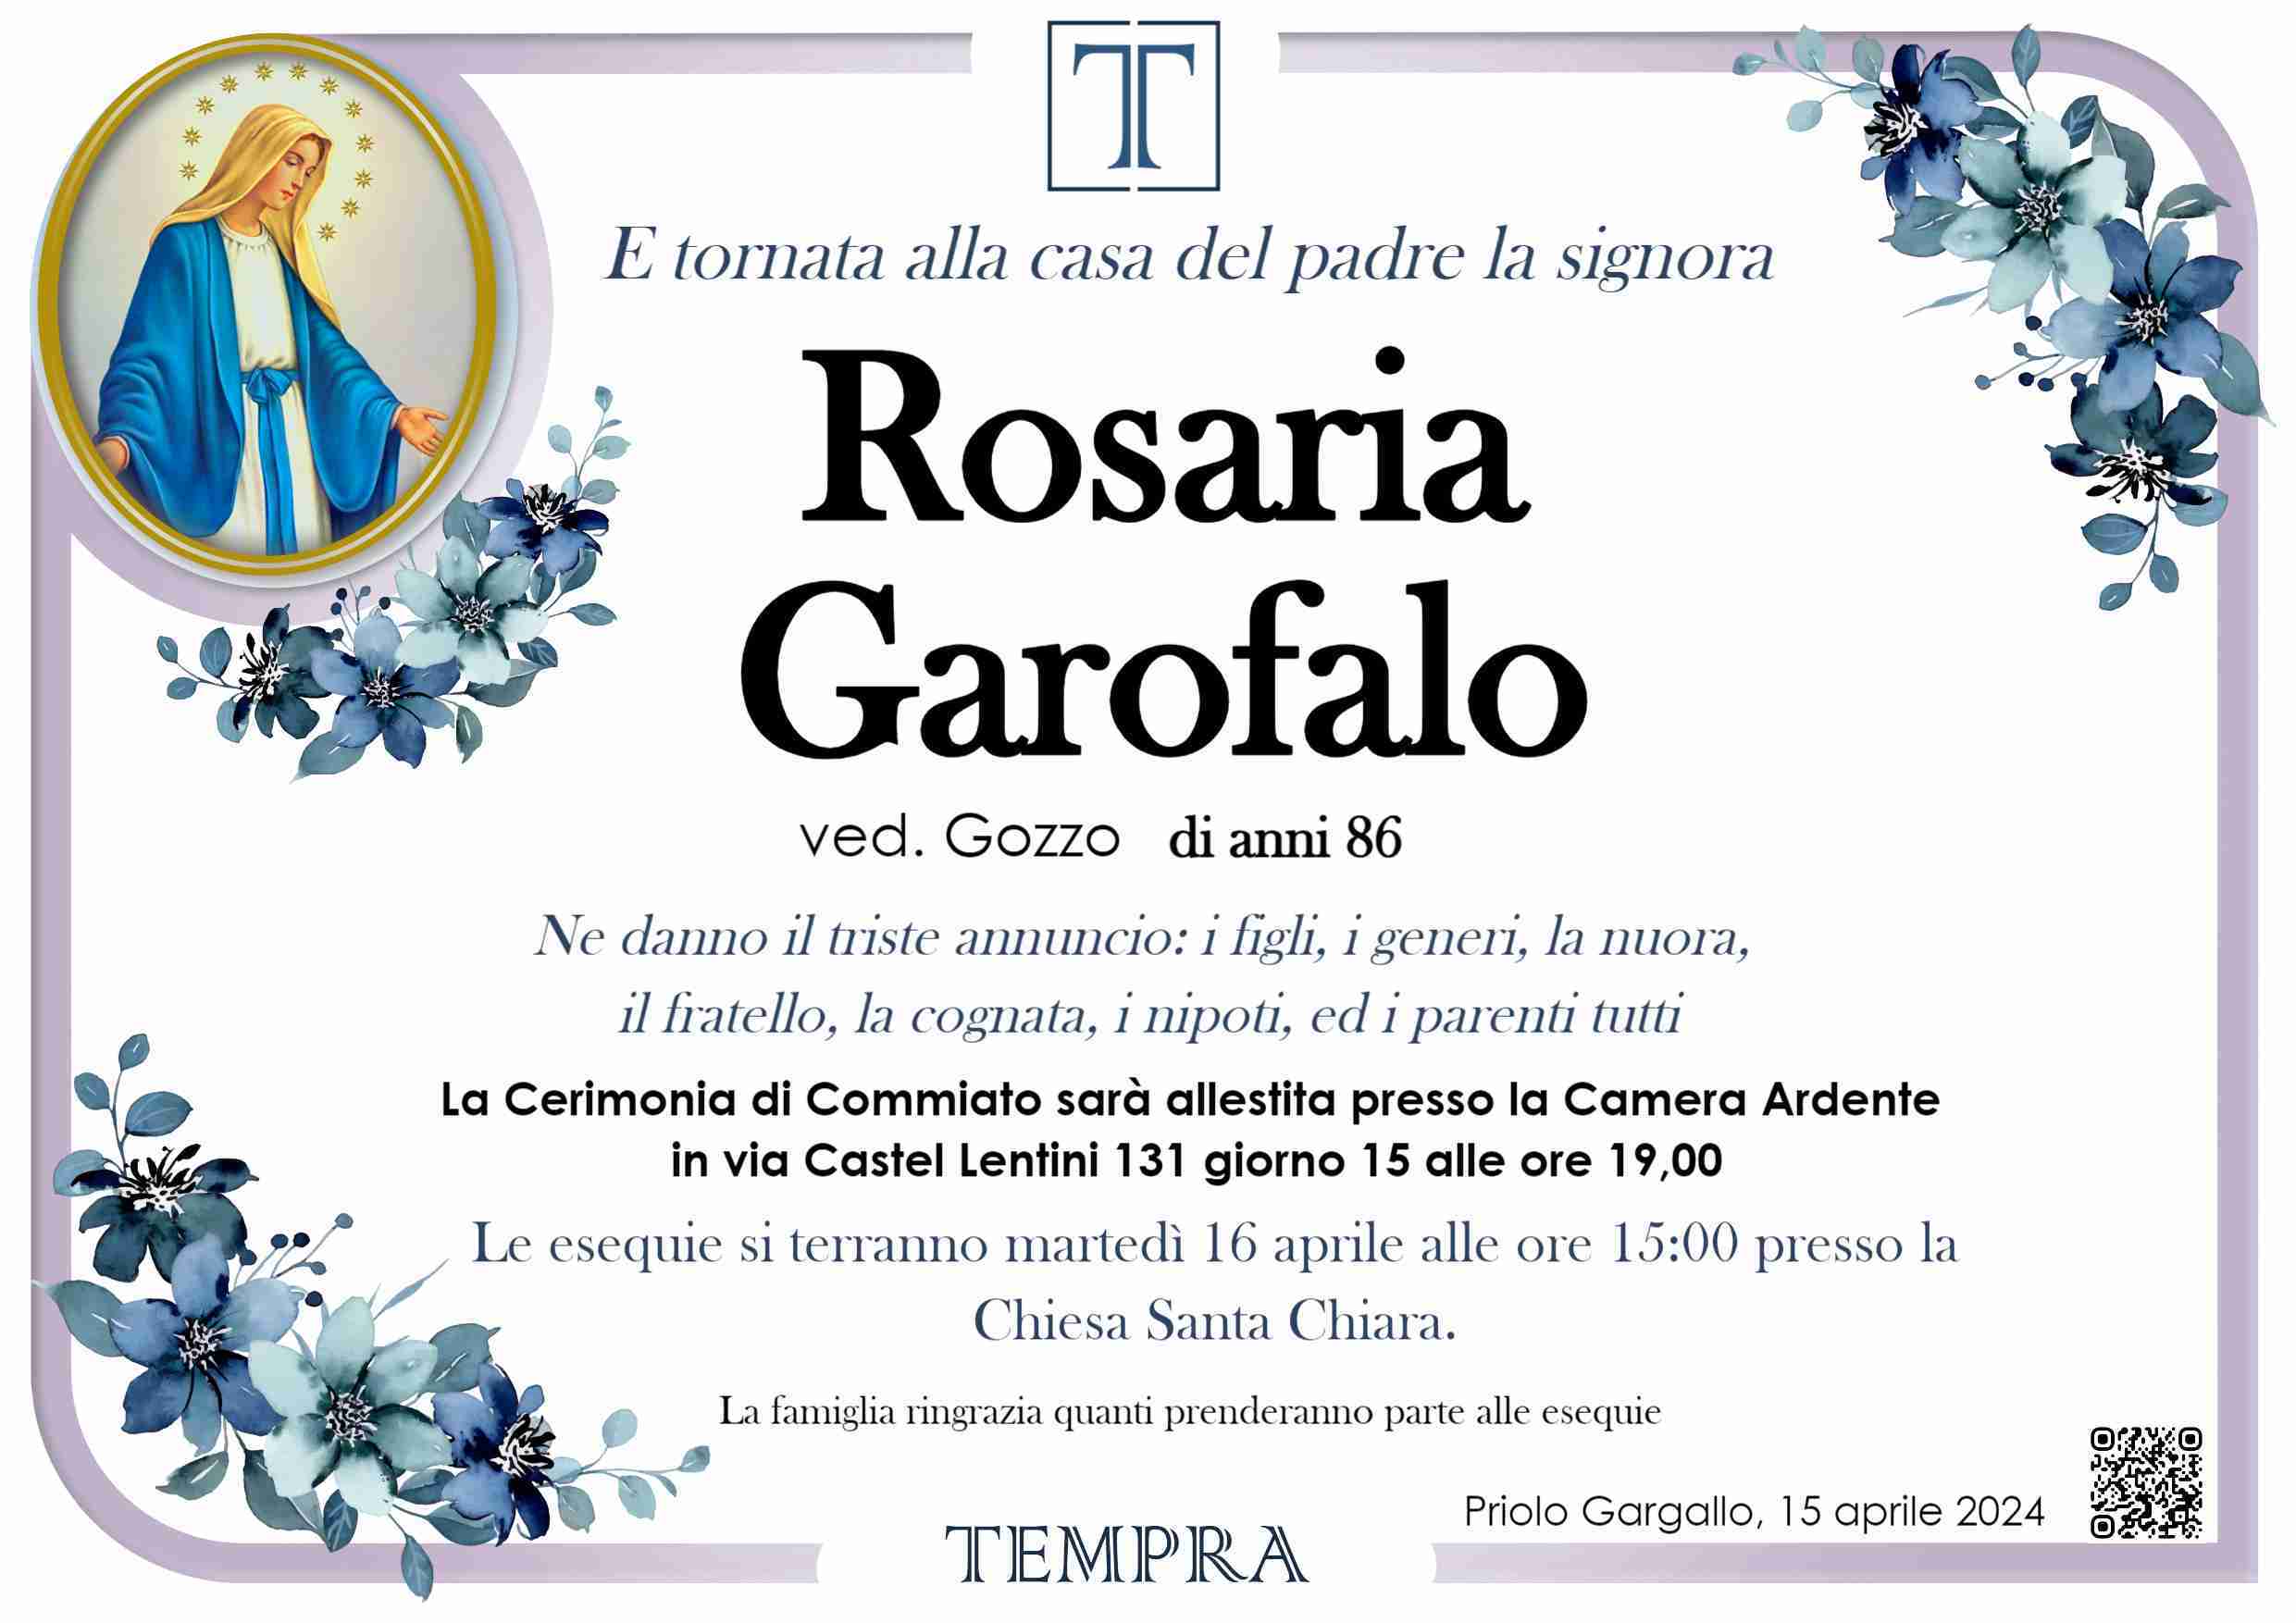 Rosaria Garofalo